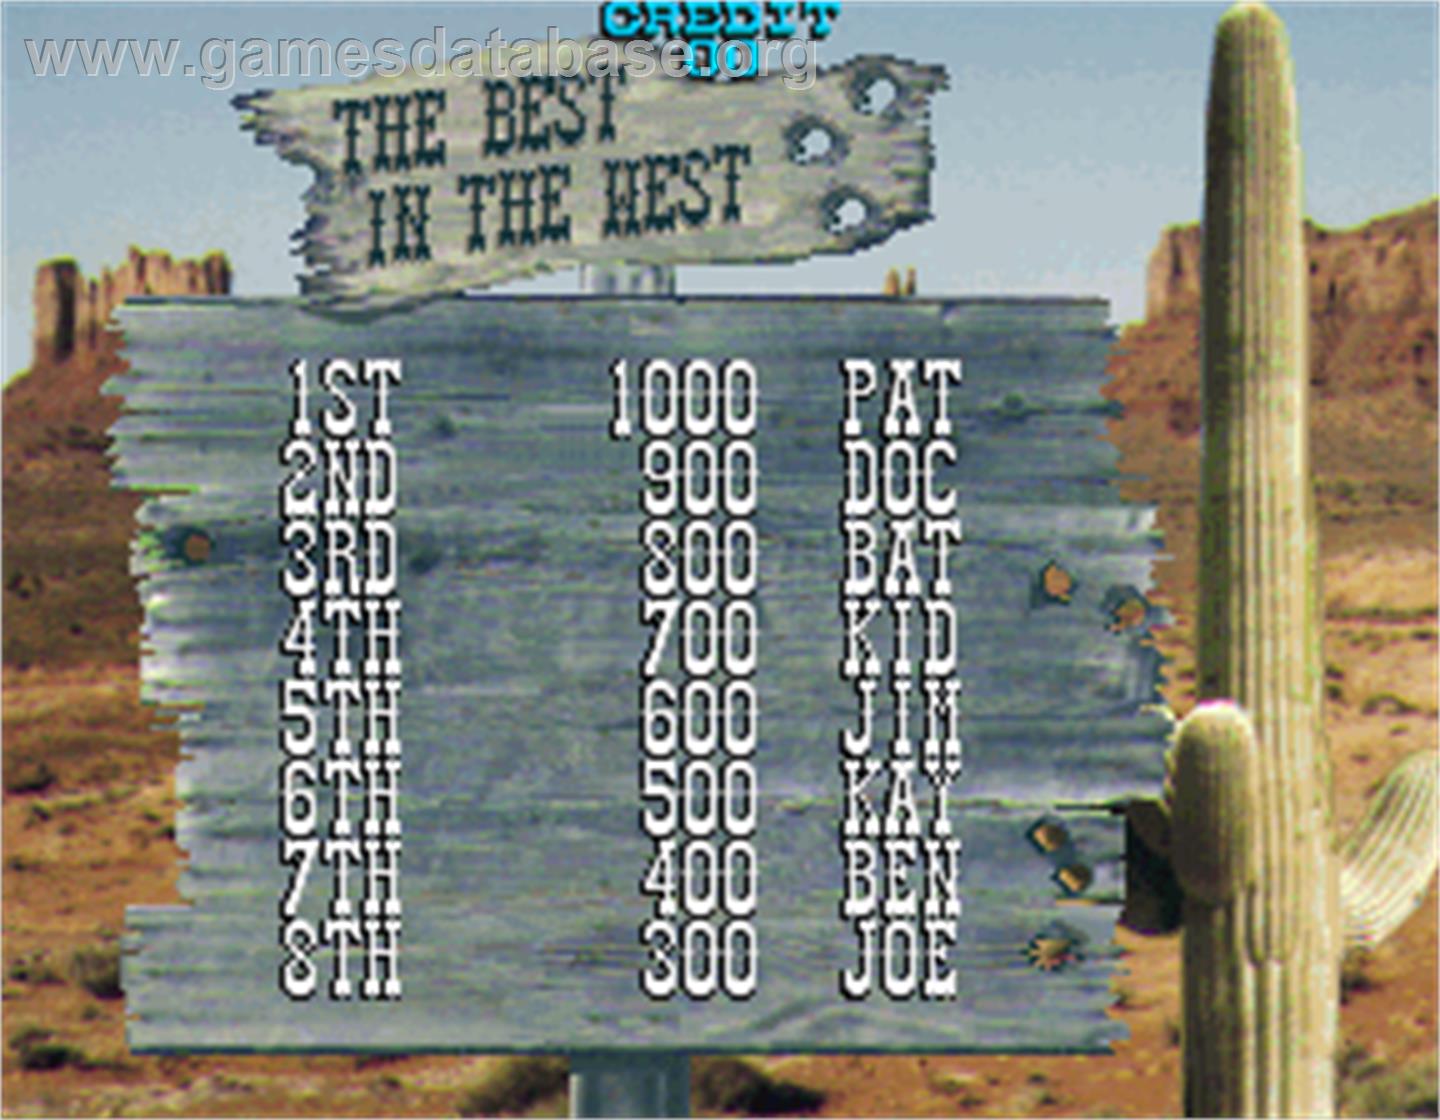 Lethal Enforcers II: The Western - Arcade - Artwork - High Score Screen